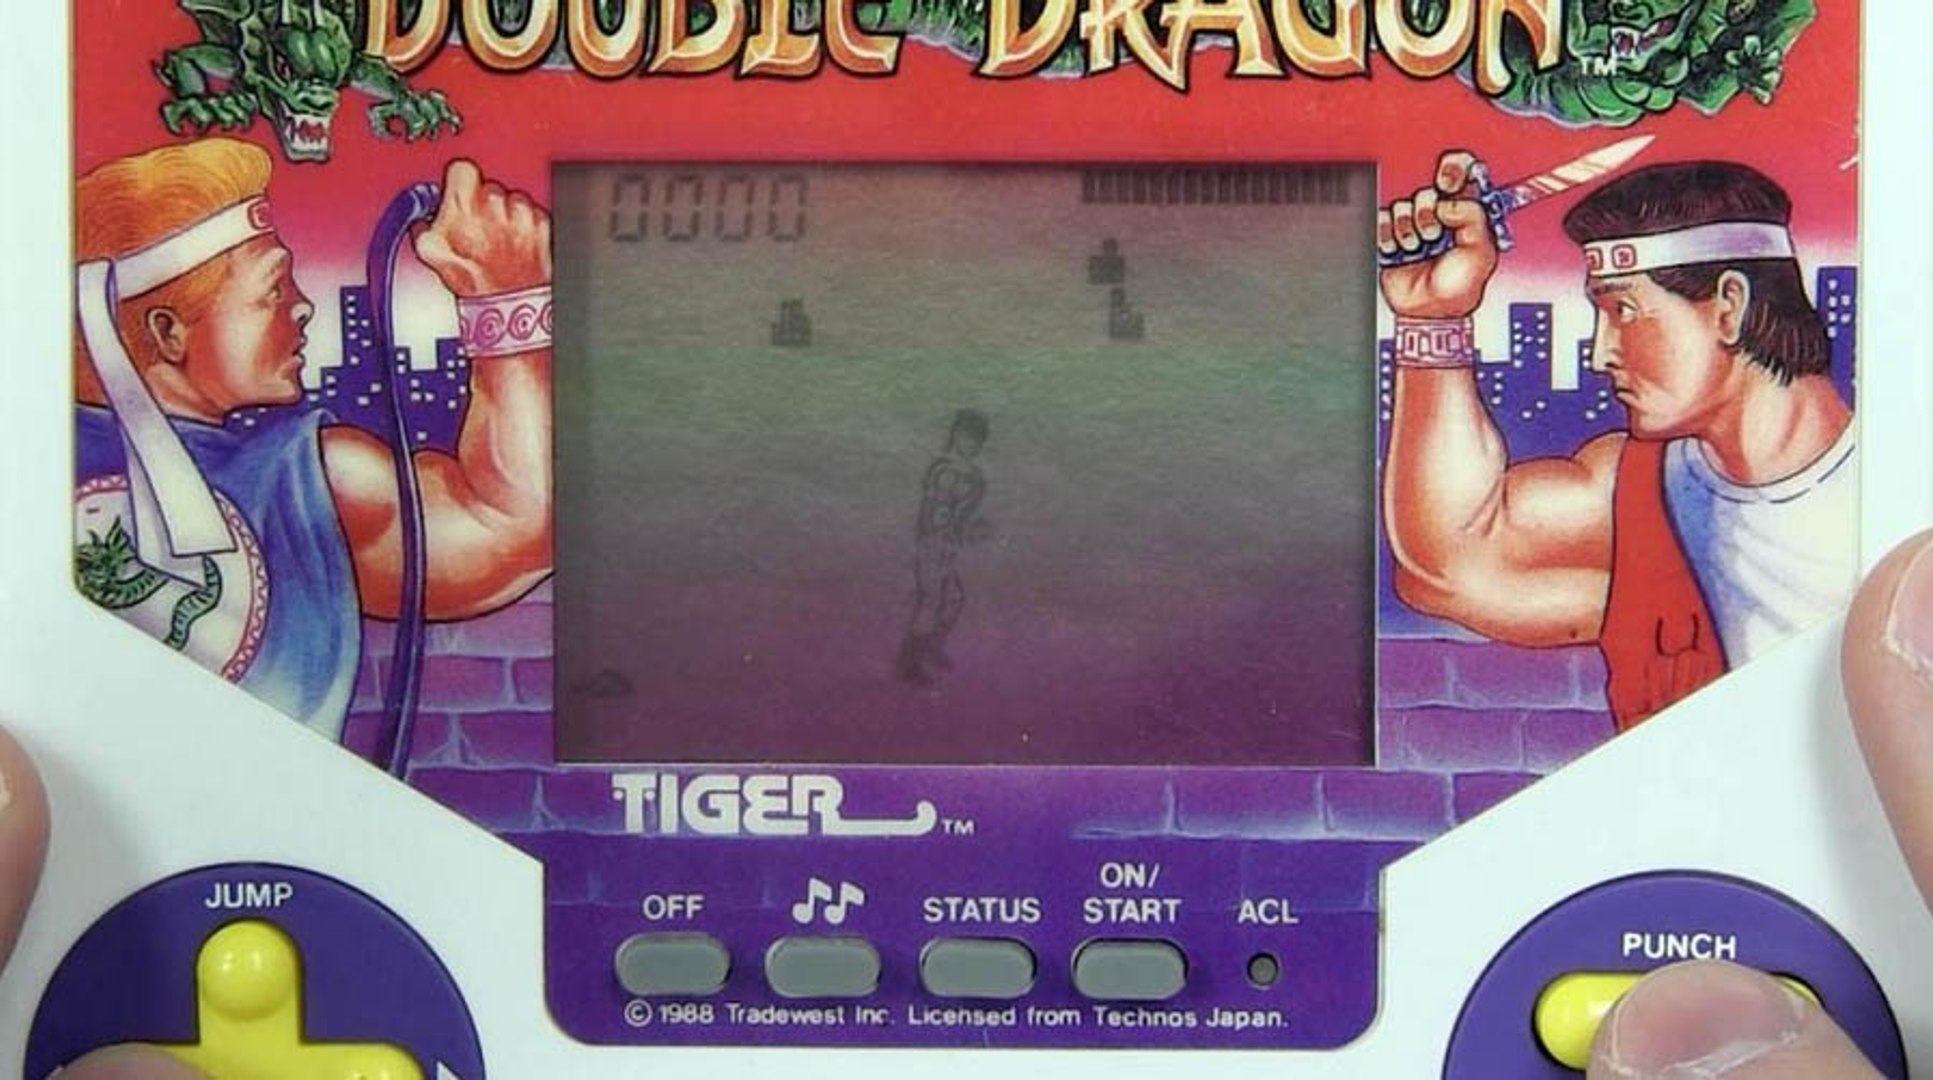 double dragon tiger handheld